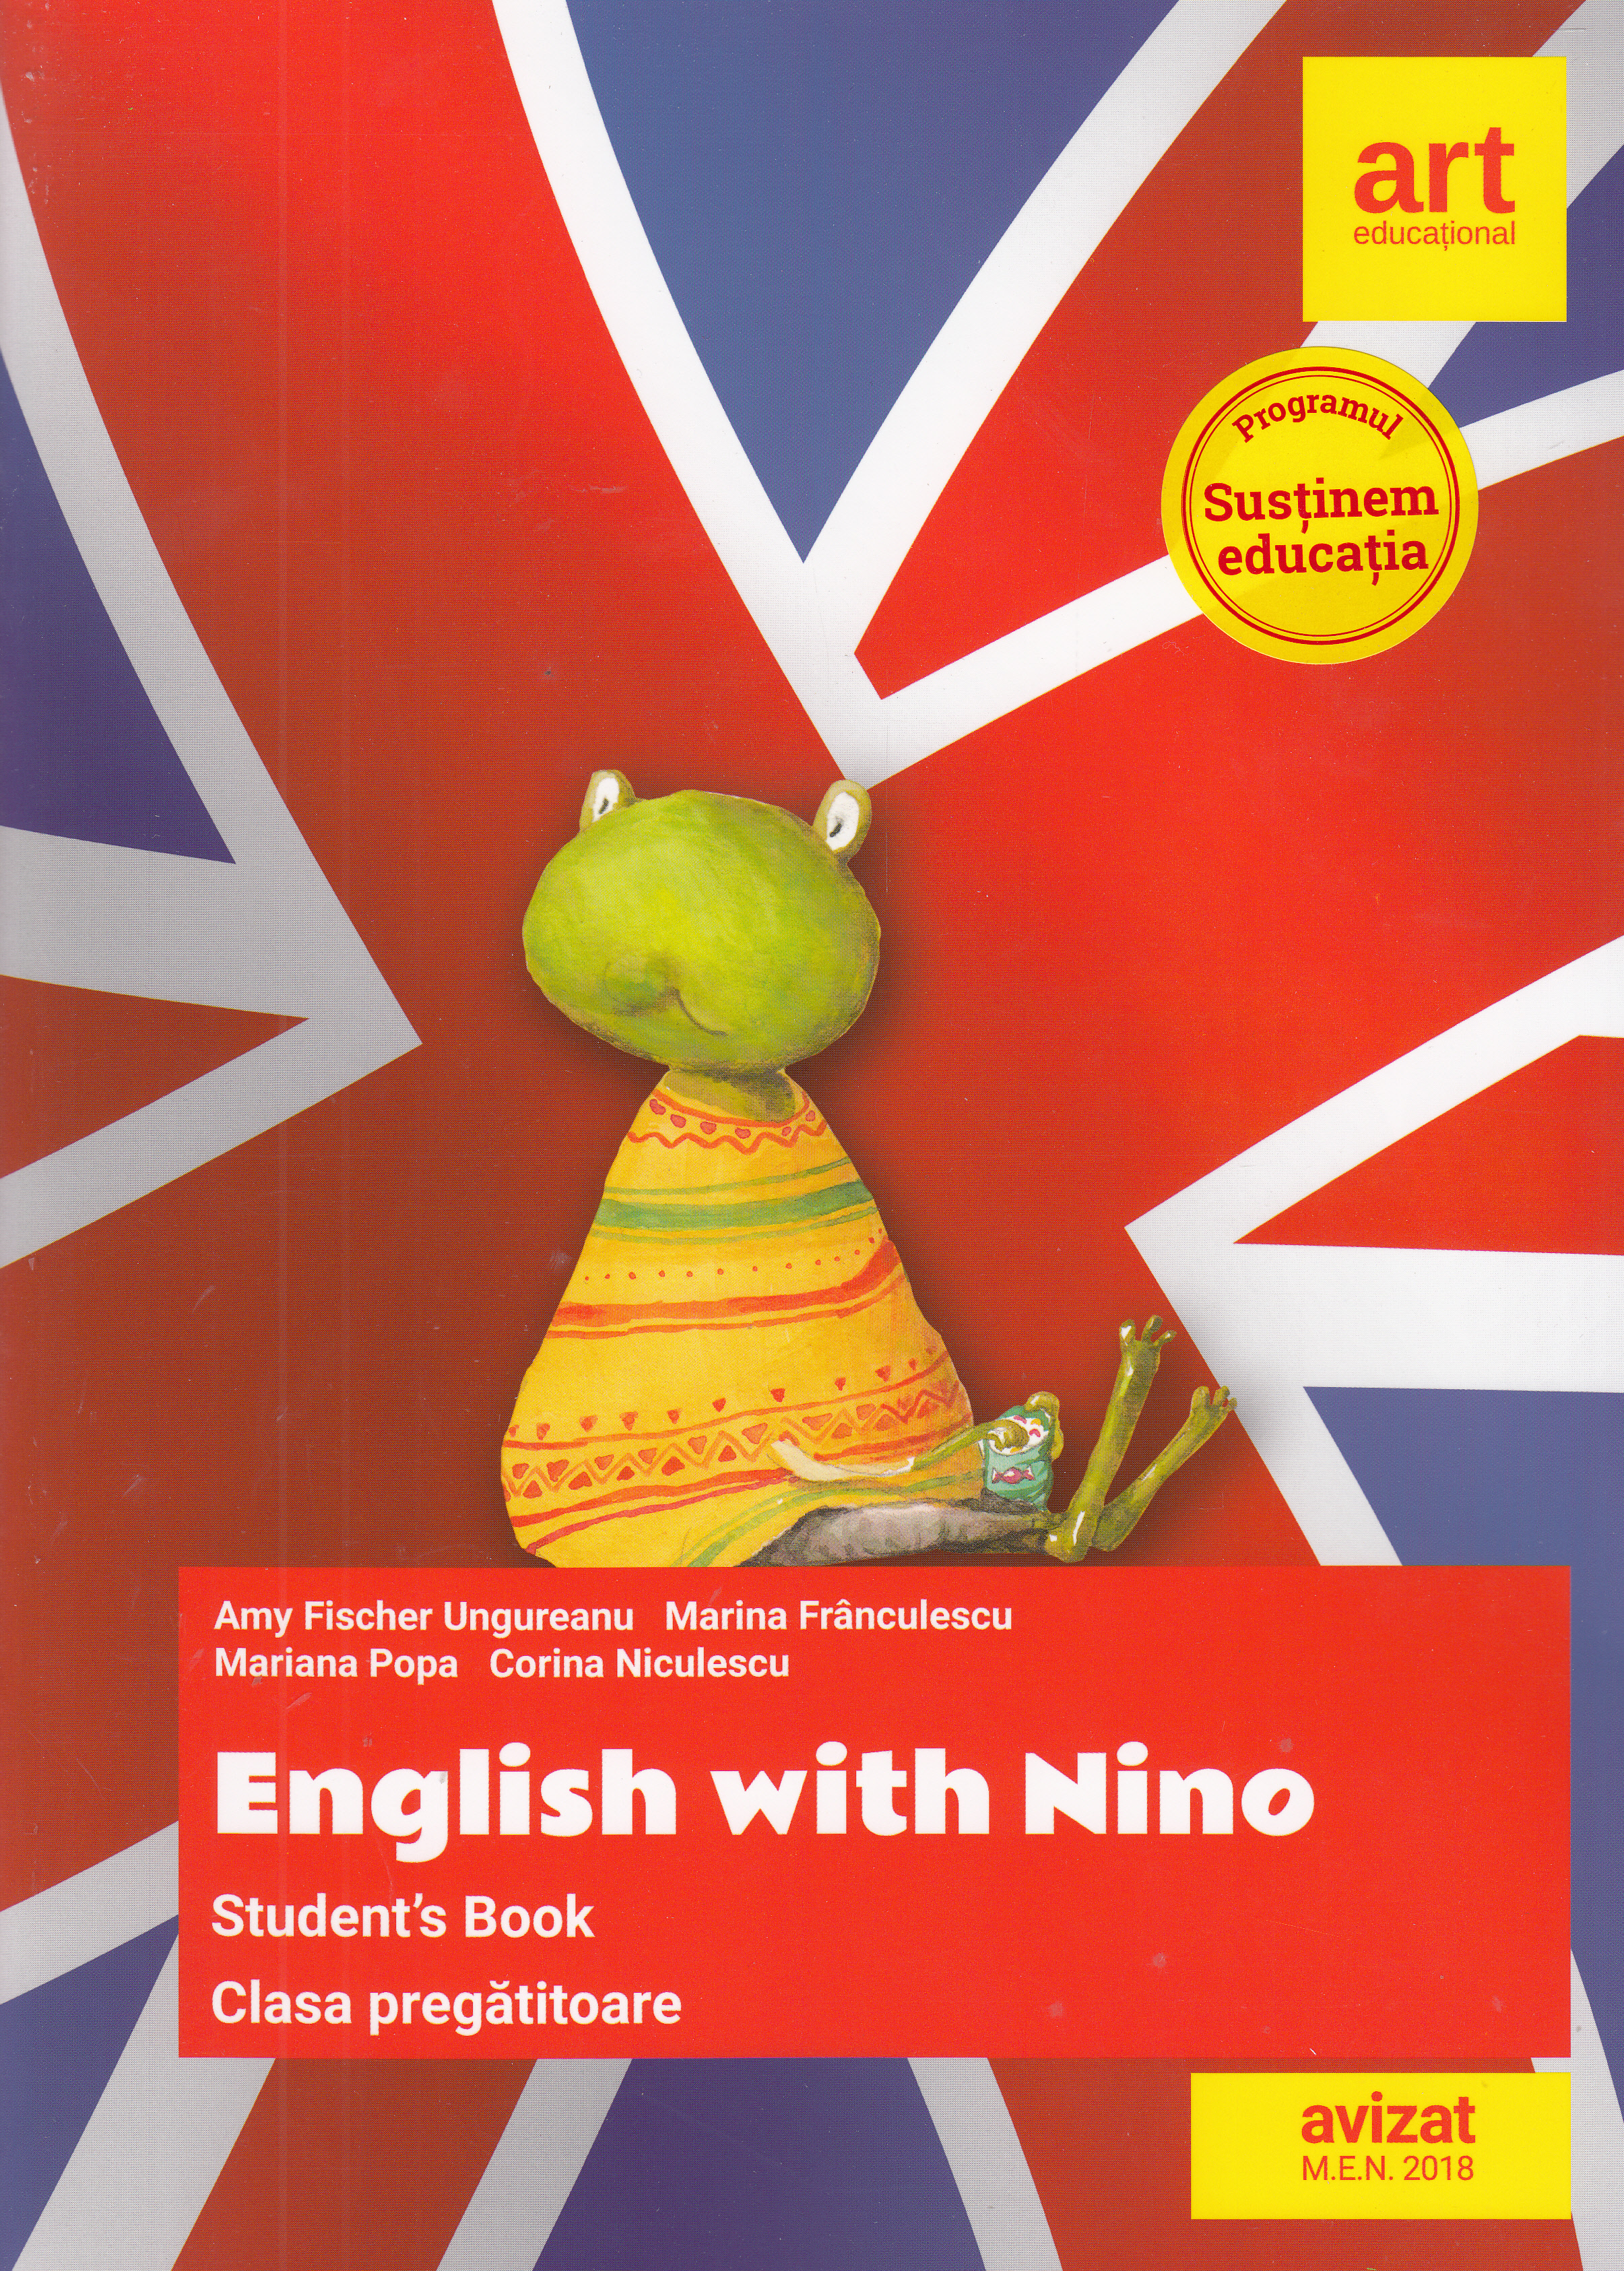 English with Nino Student's Book - Clasa Pregatitoare - Amy Fischer Ungureanu